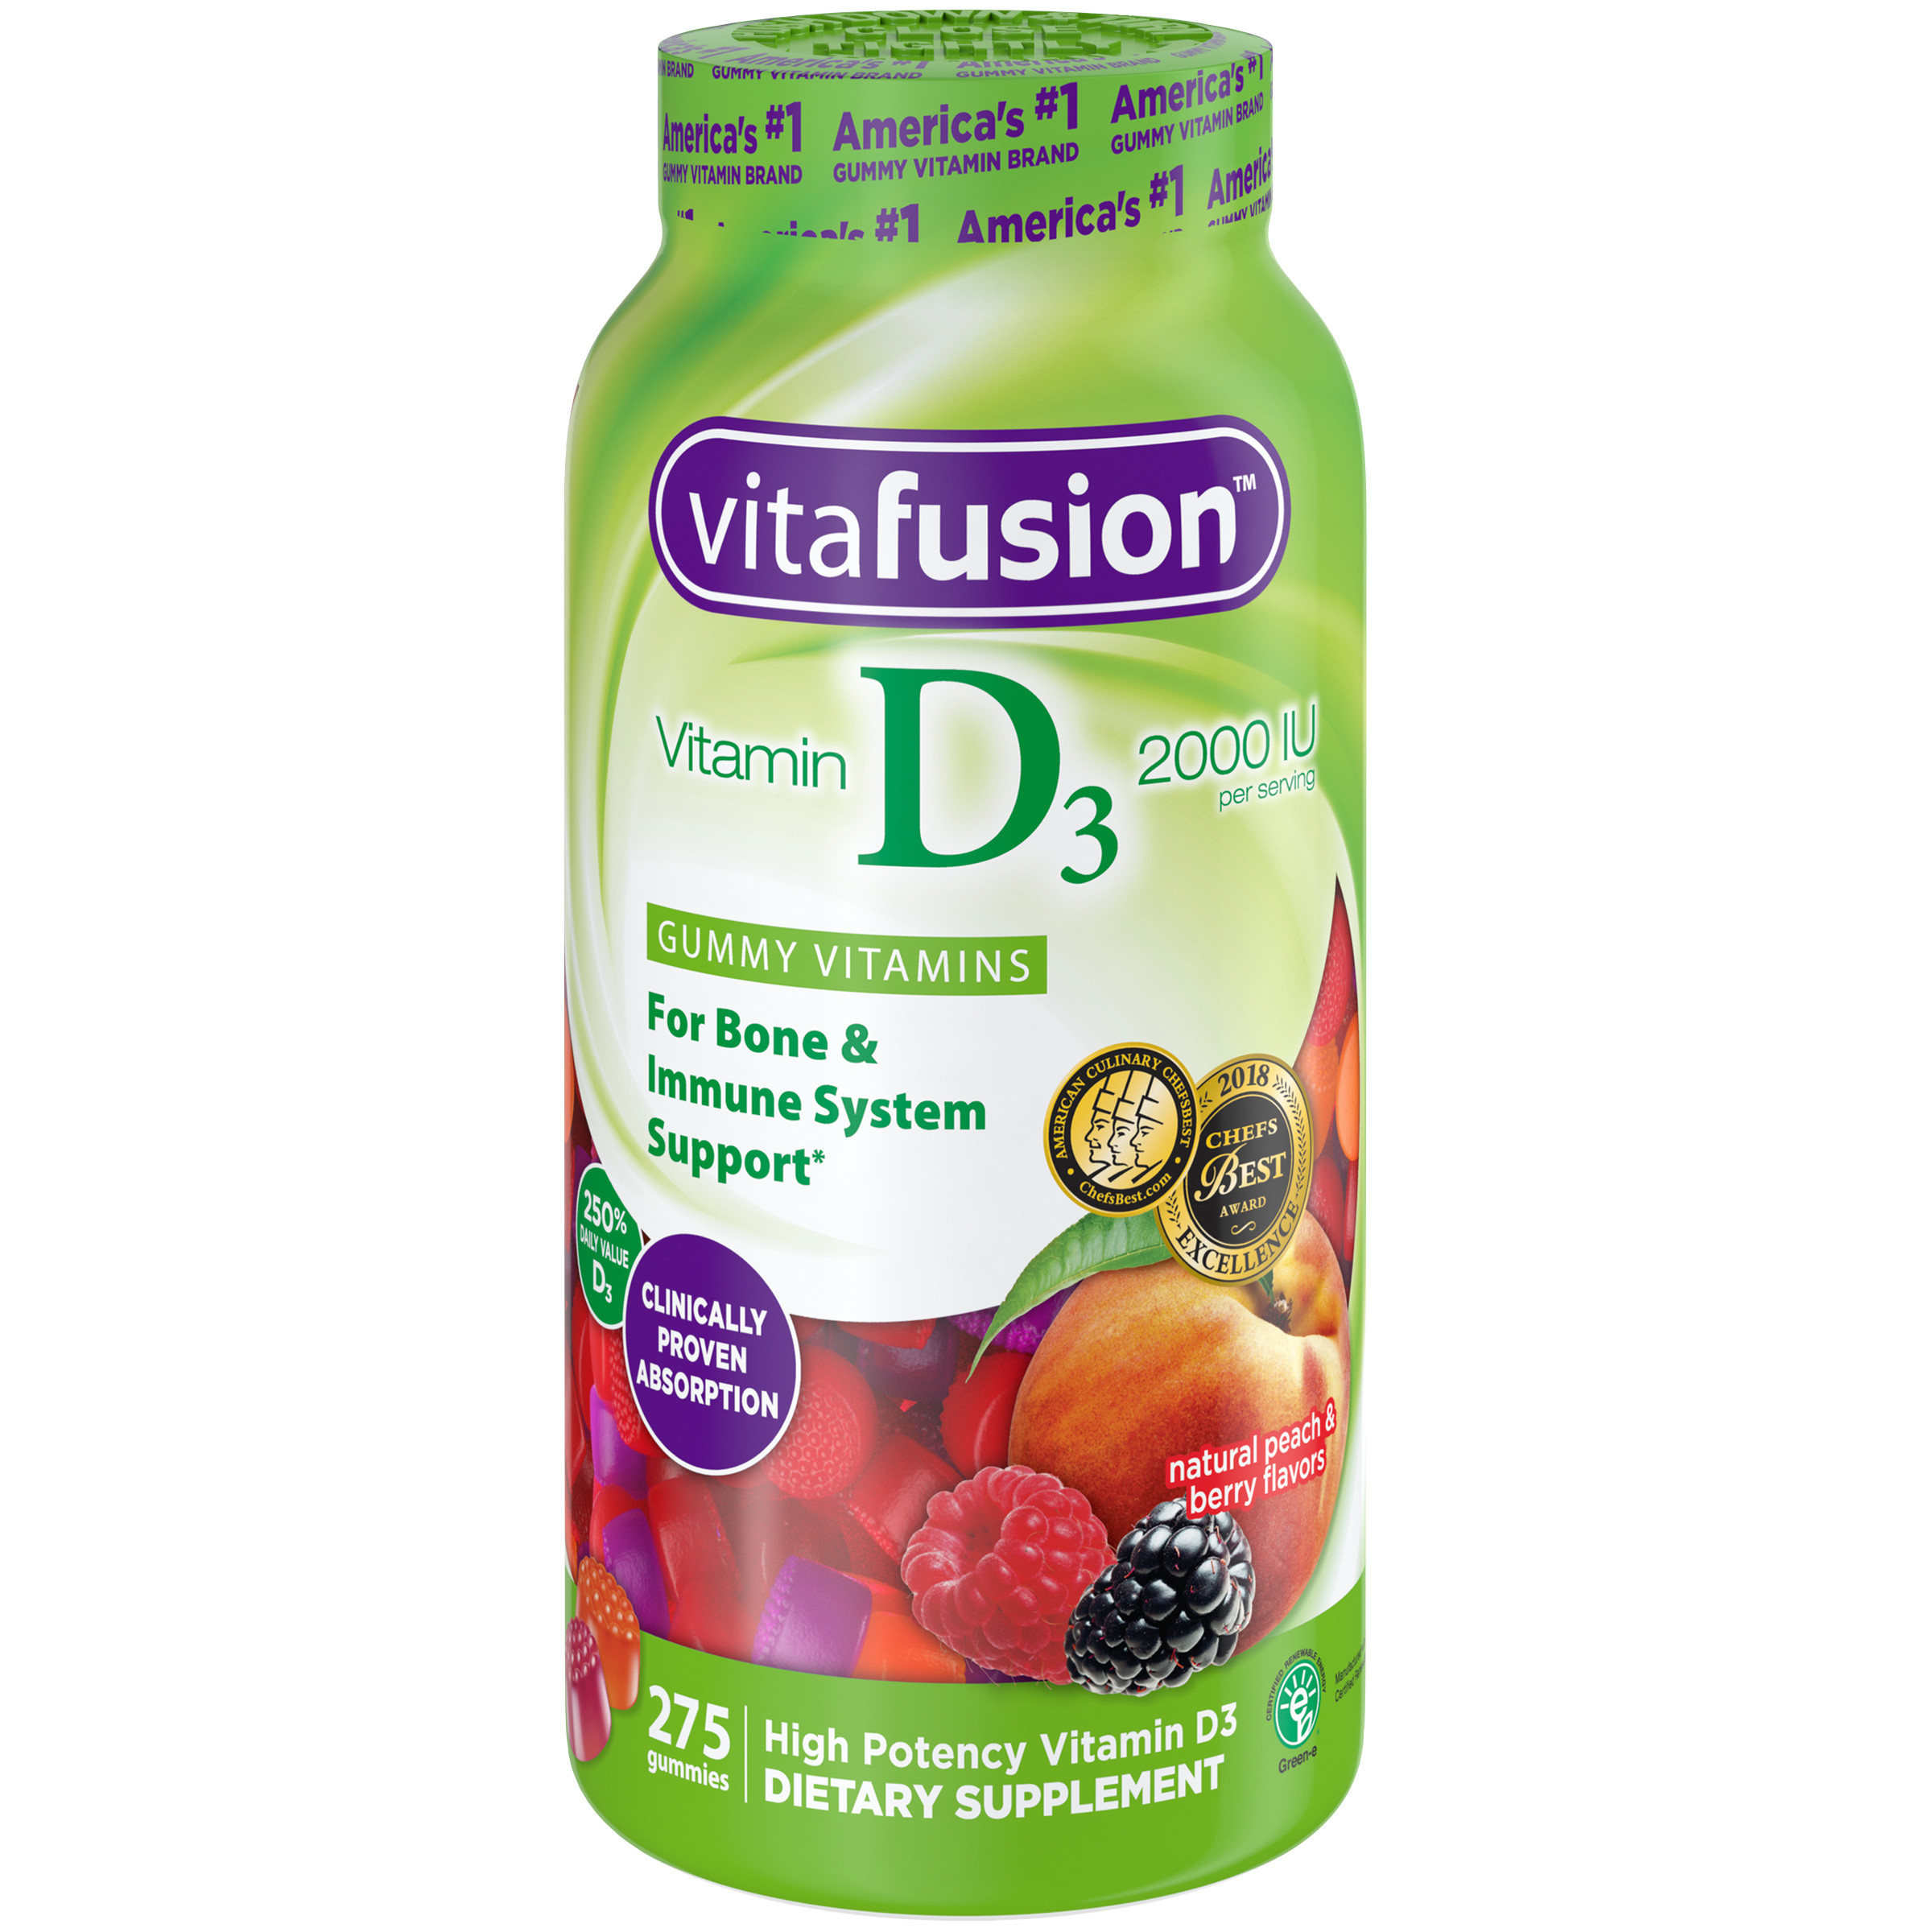 Vitafusion Vitamin D3 Gummy Vitamins, 275 ct - image 1 of 9